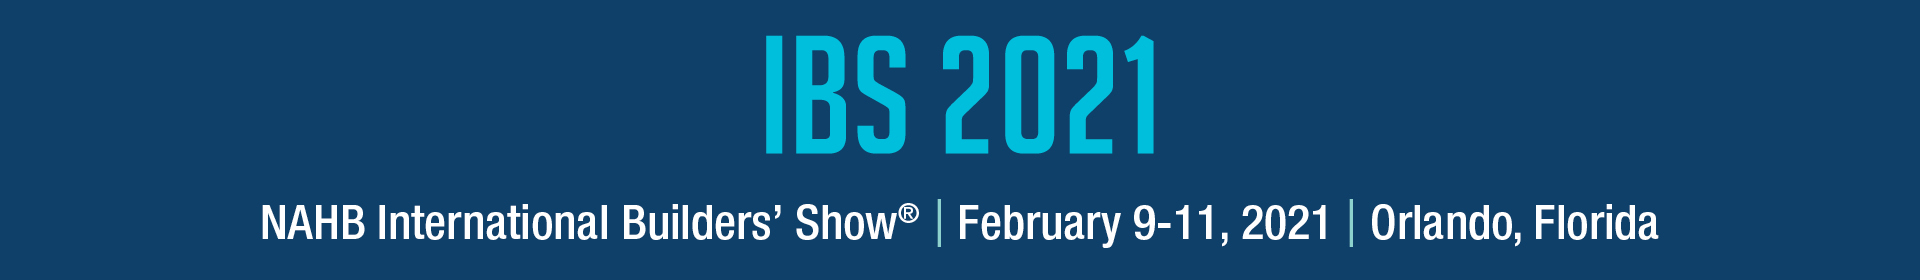 2021 NAHB International Builders' Show Event Banner